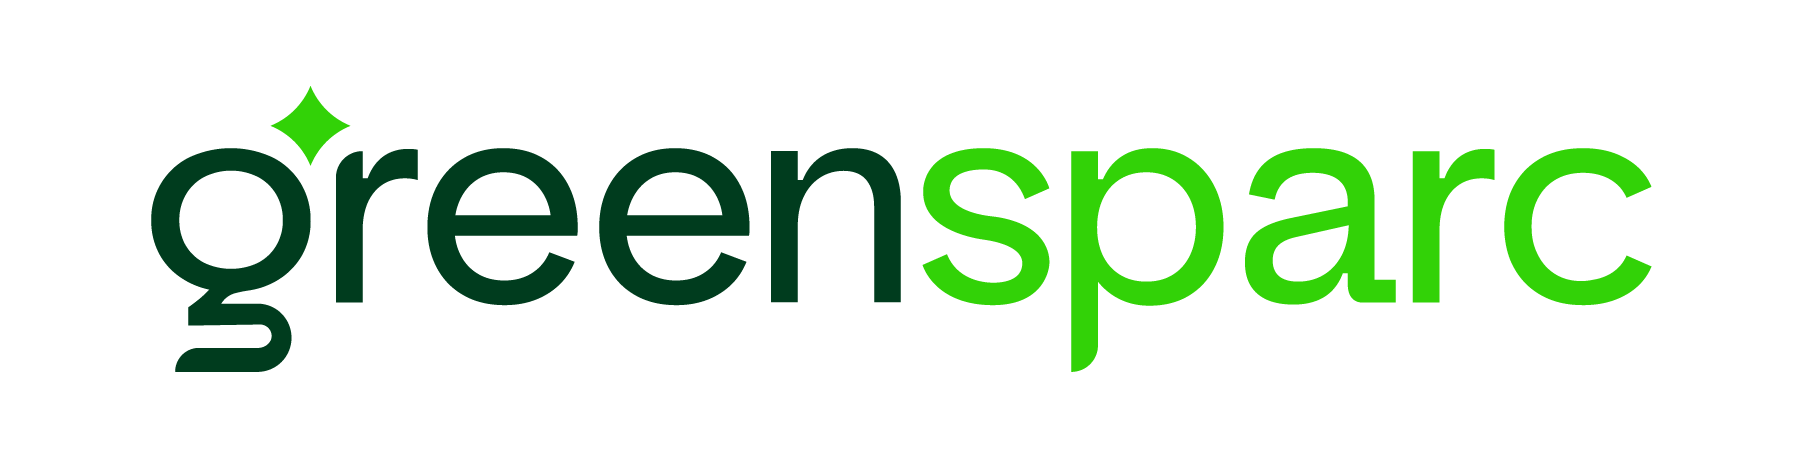 Greensparc_Logo-2.png